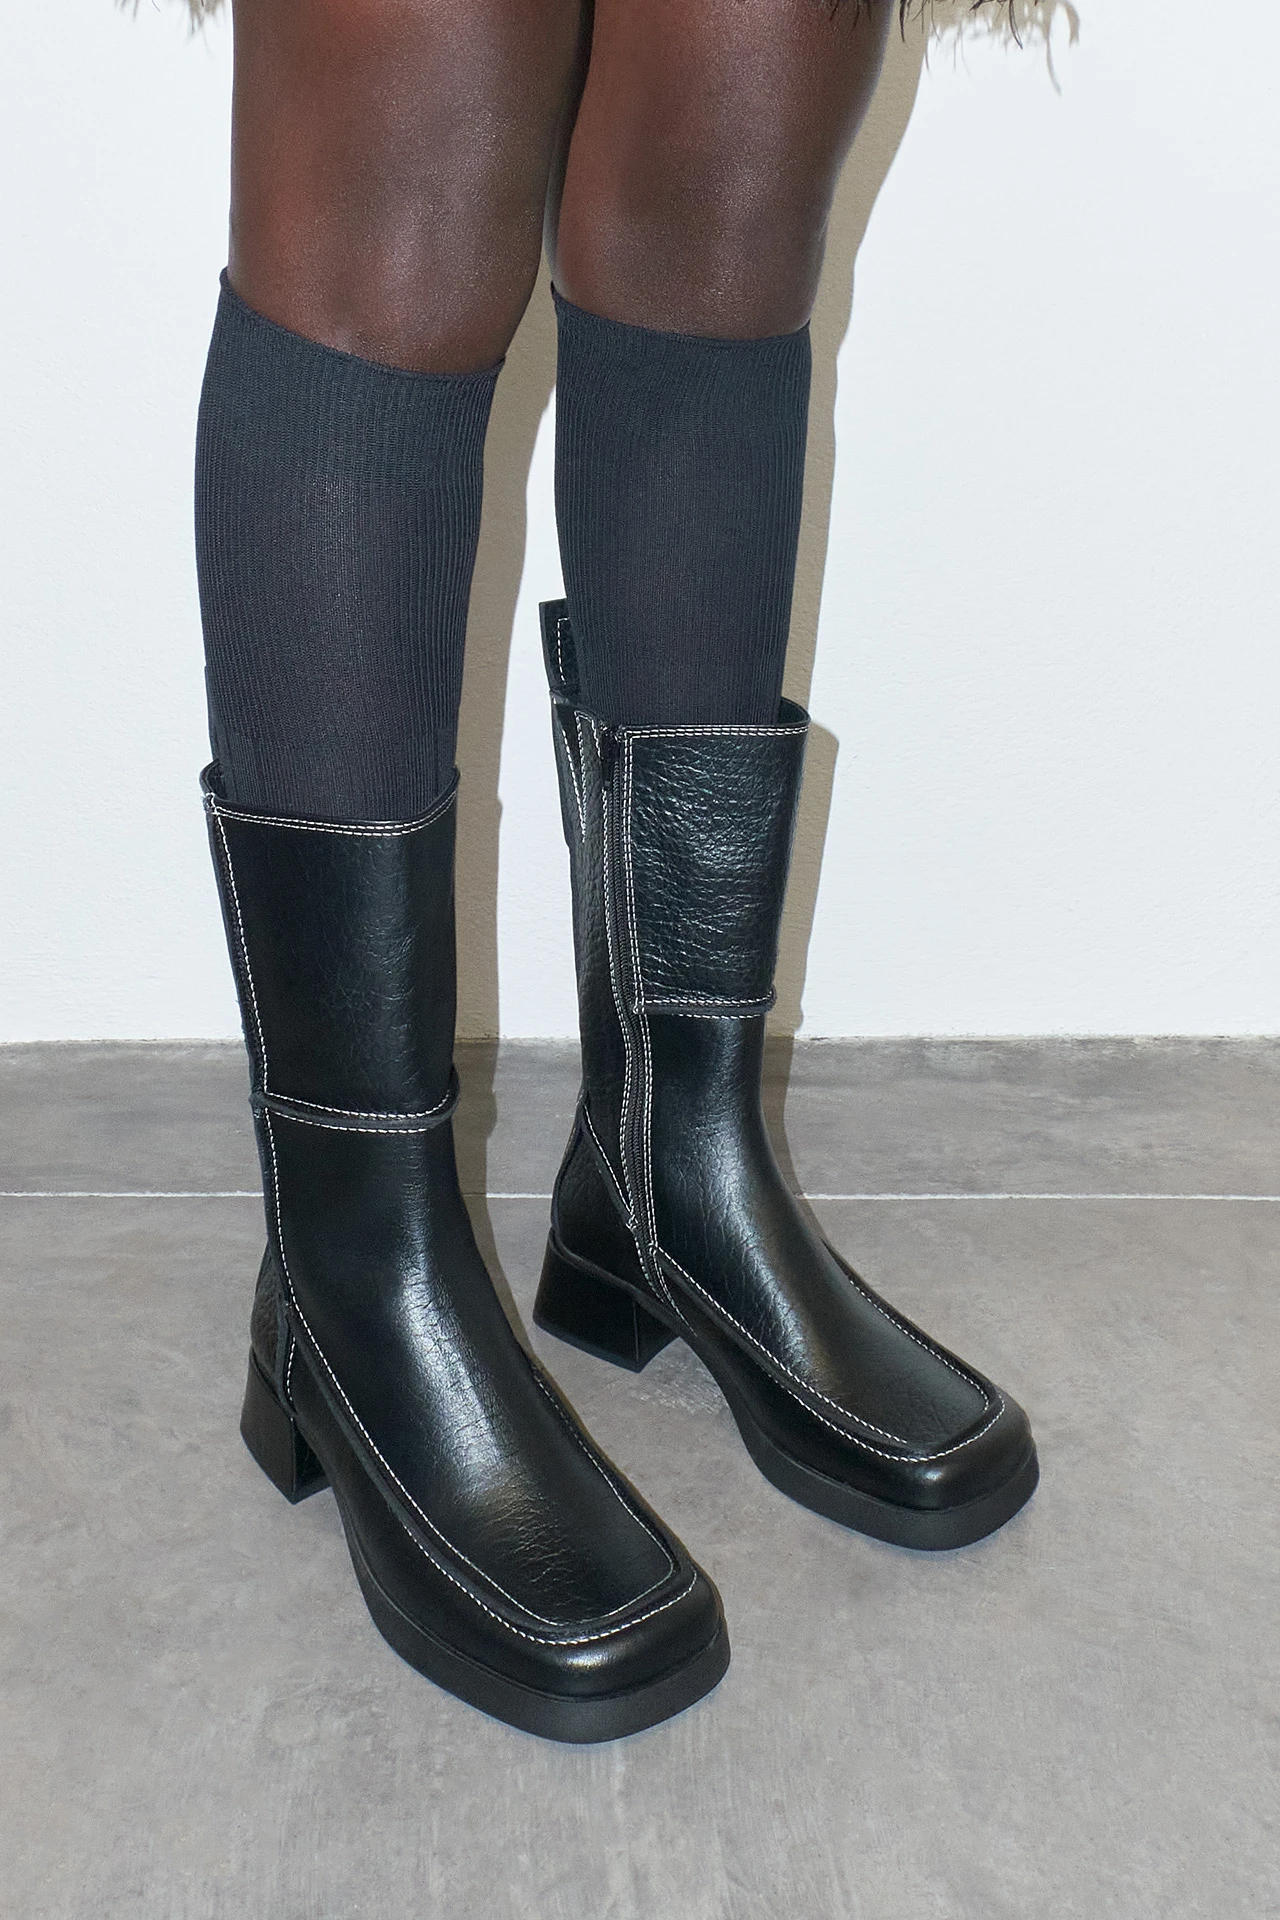 EC-E8-alzira-black-boots-01